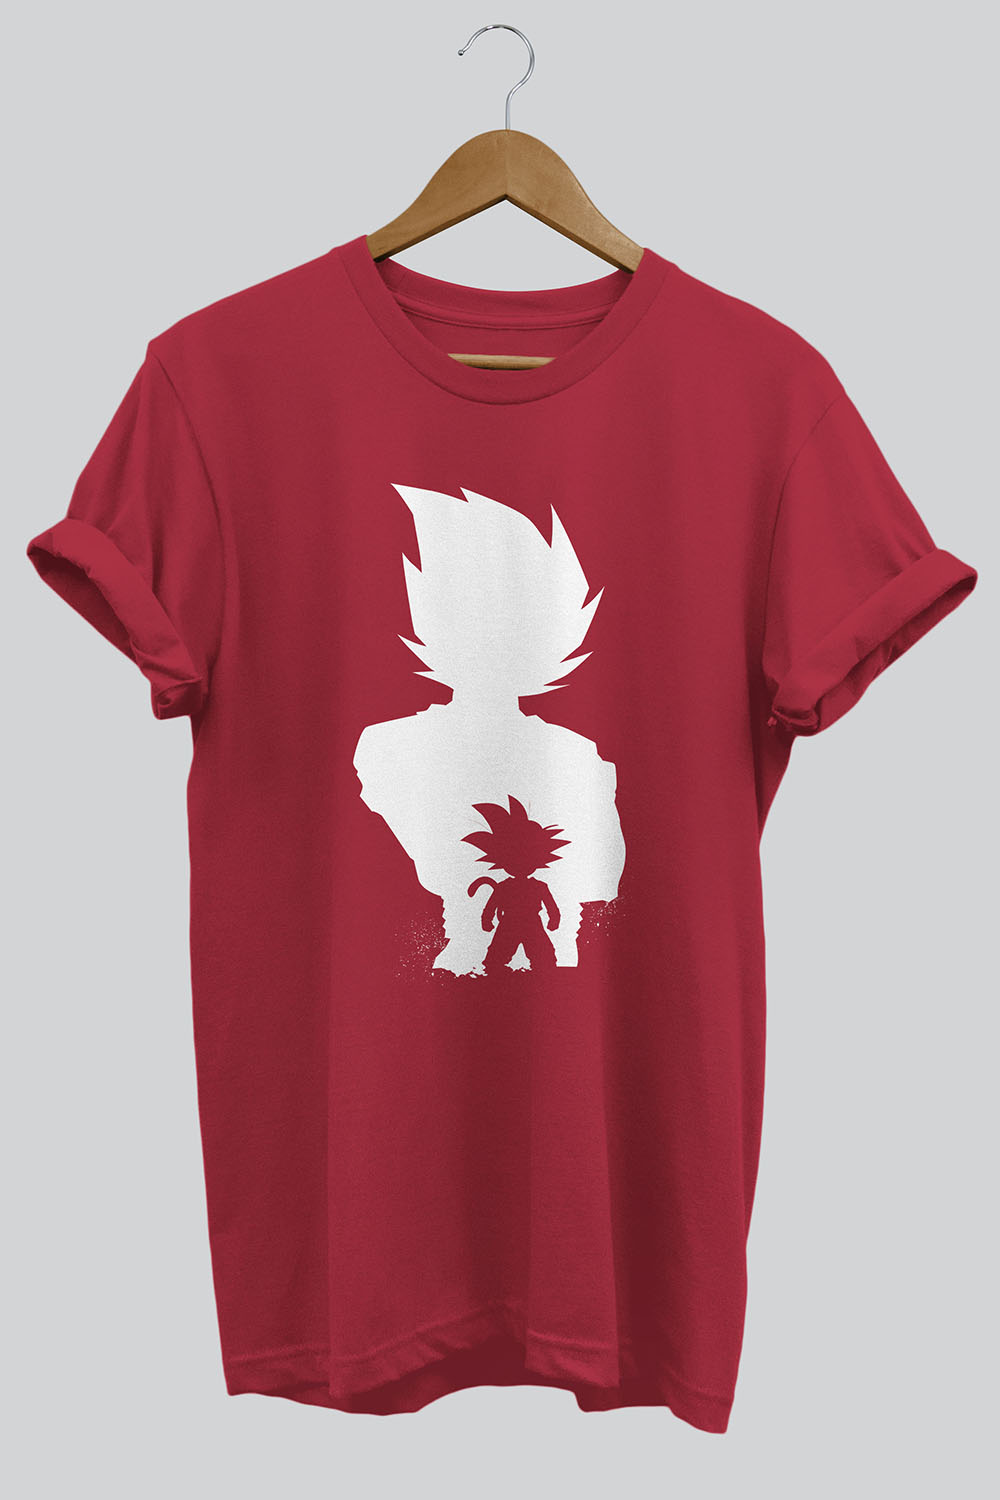 Goku & Son Graphic Tshirt